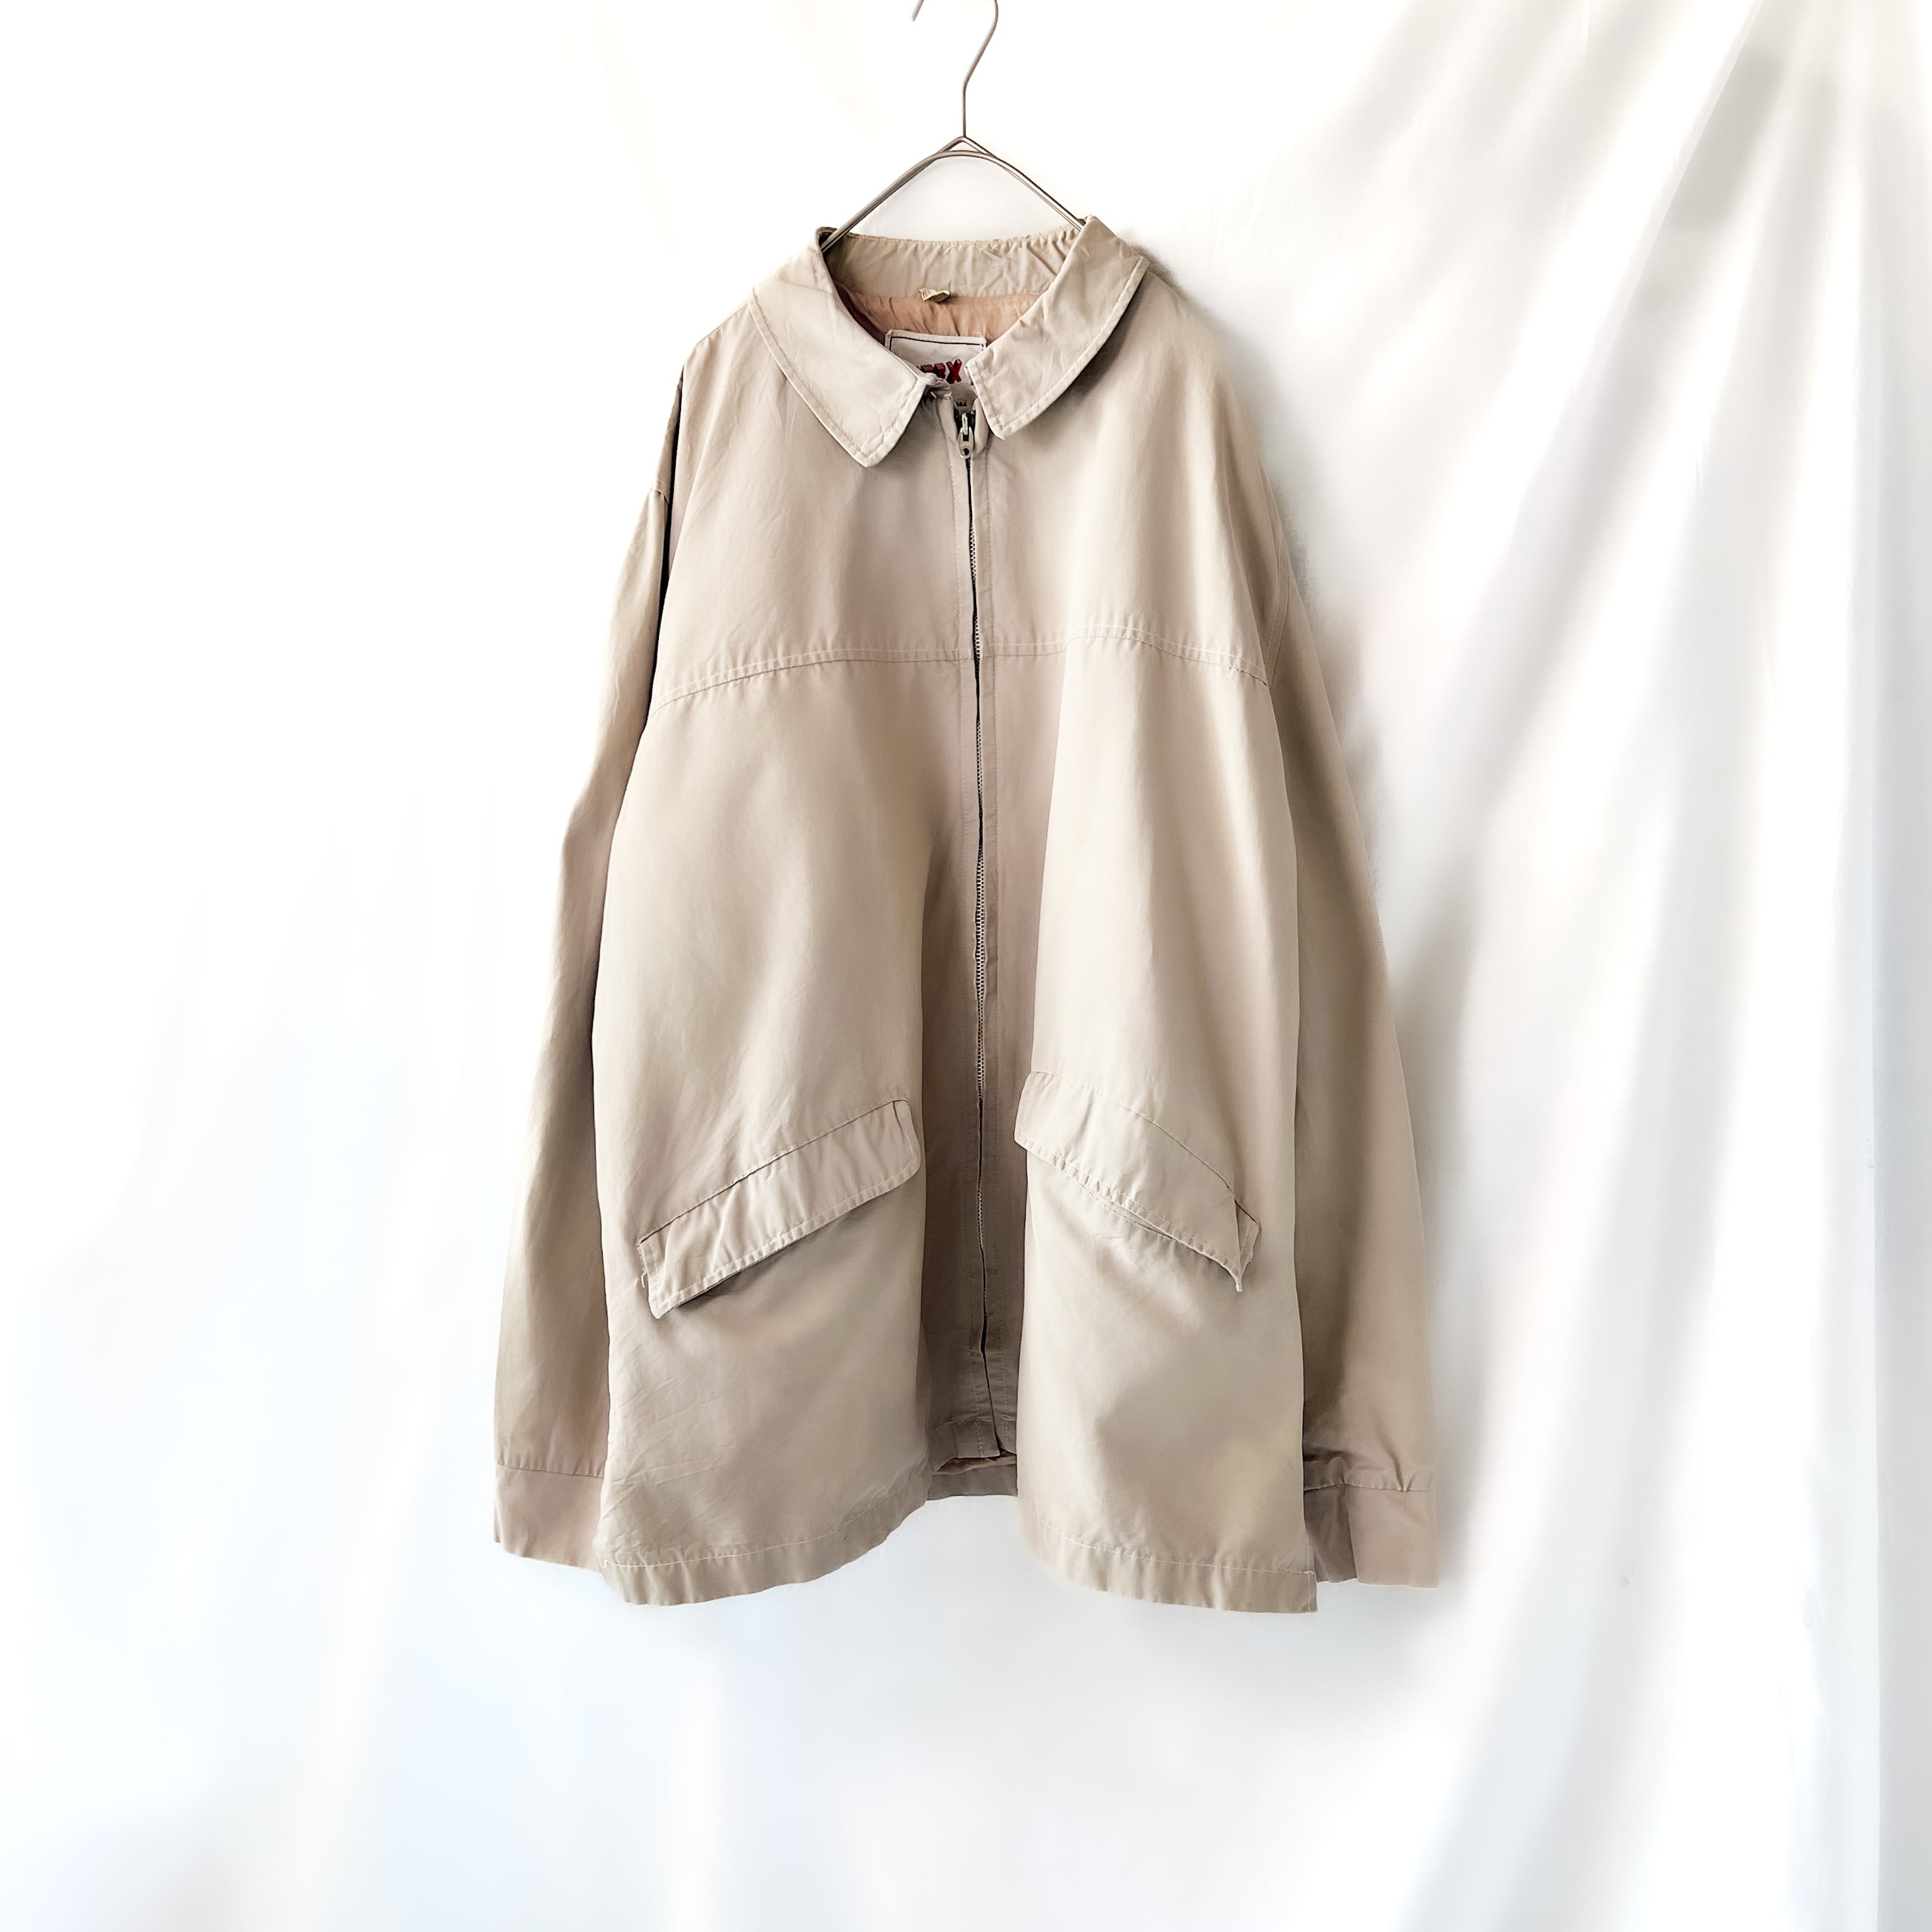 about s “UTEX” harrington jacket Lightning zip made in canada